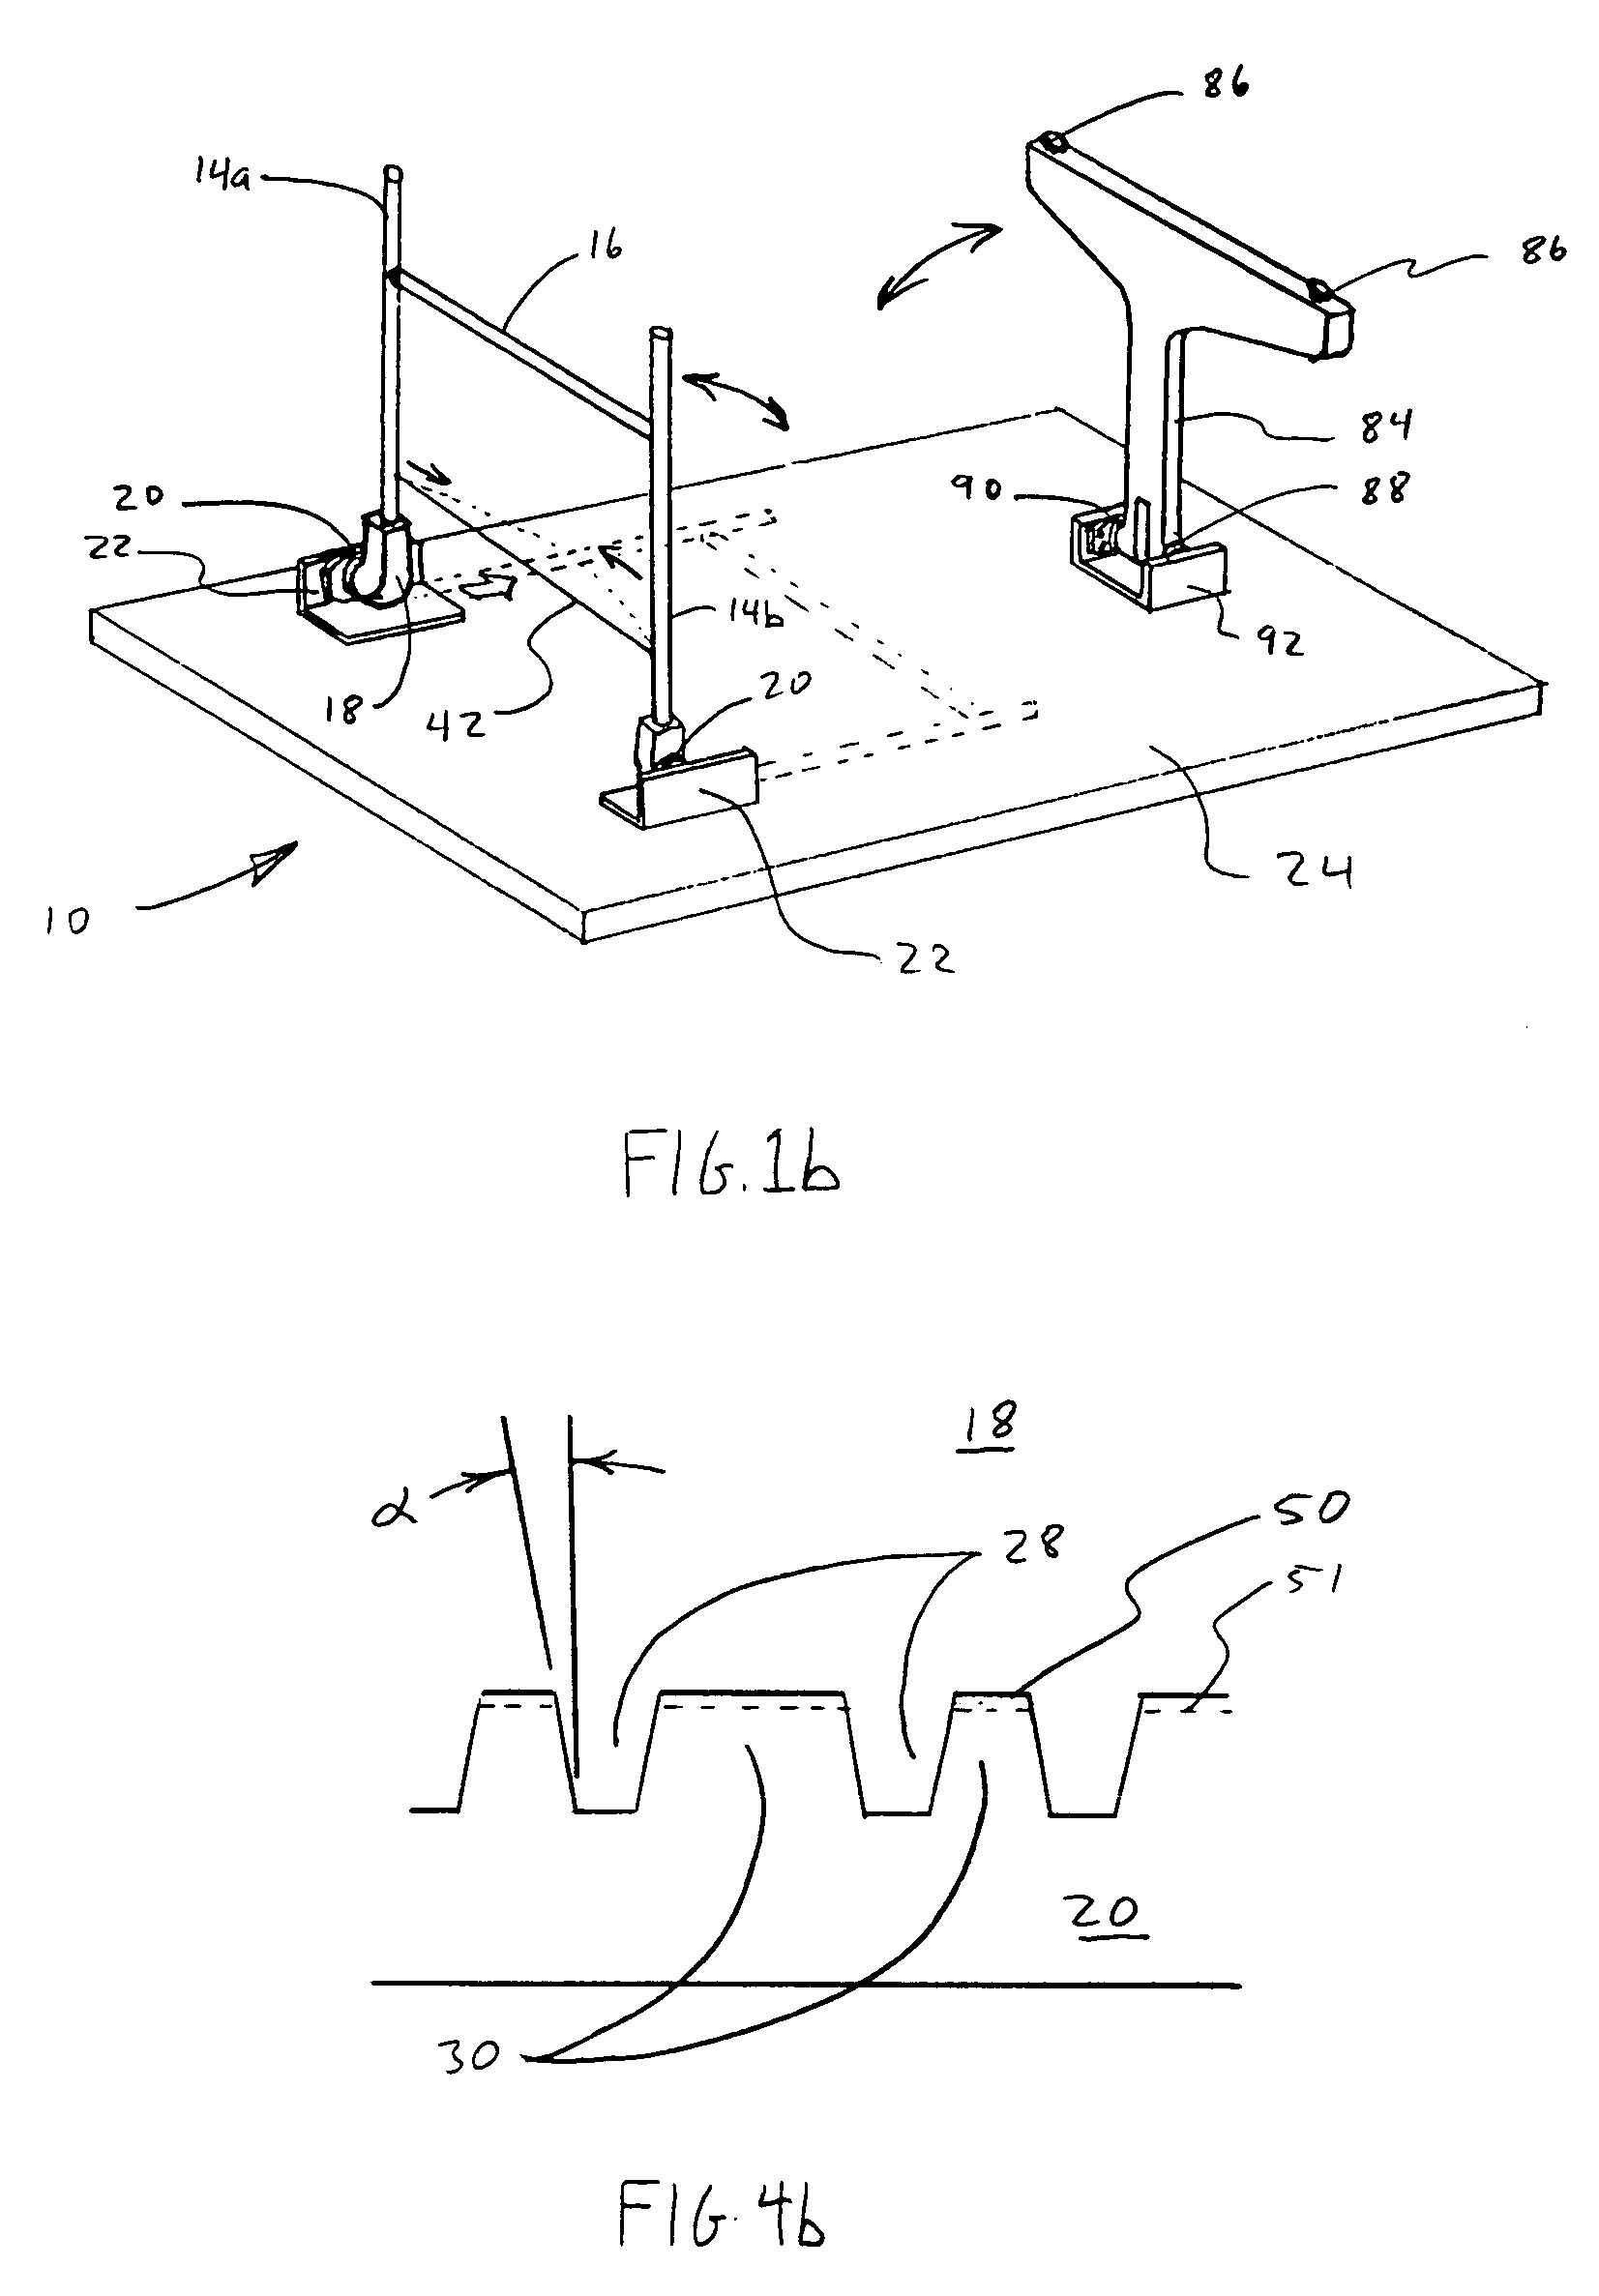 Locking mechanism for folding legs